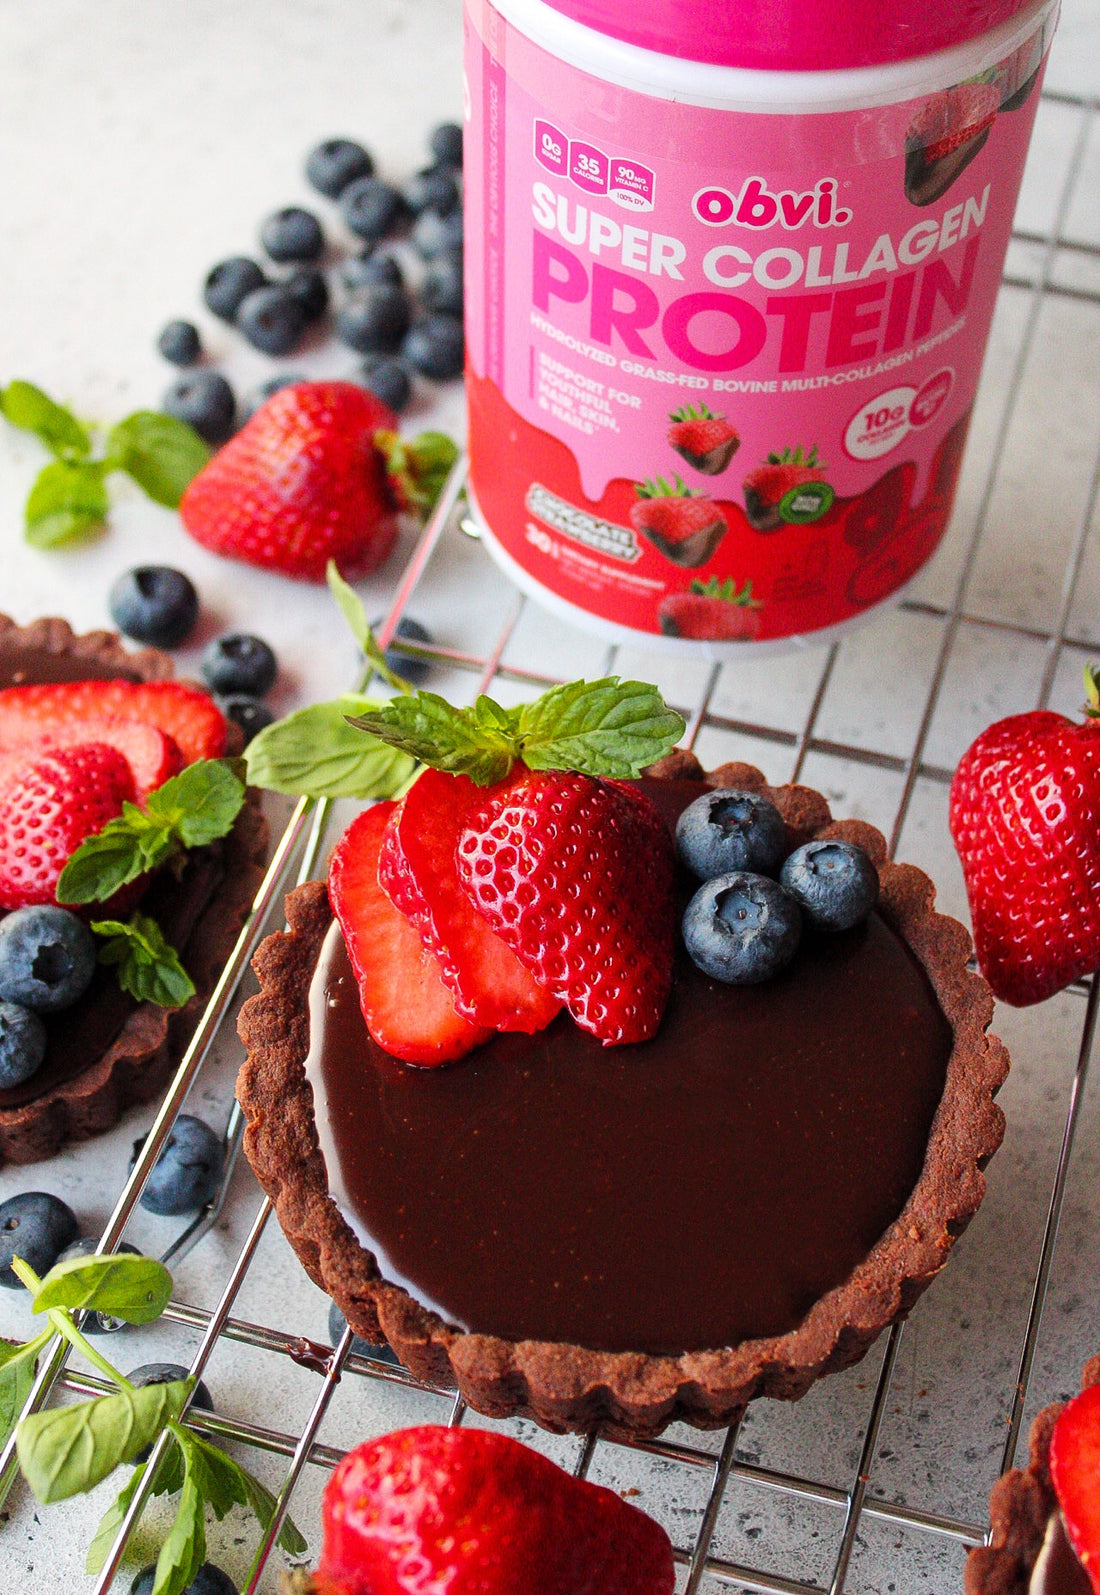 Mini Chocolate Tarts with Chocolate Strawberry Super Collagen Protein